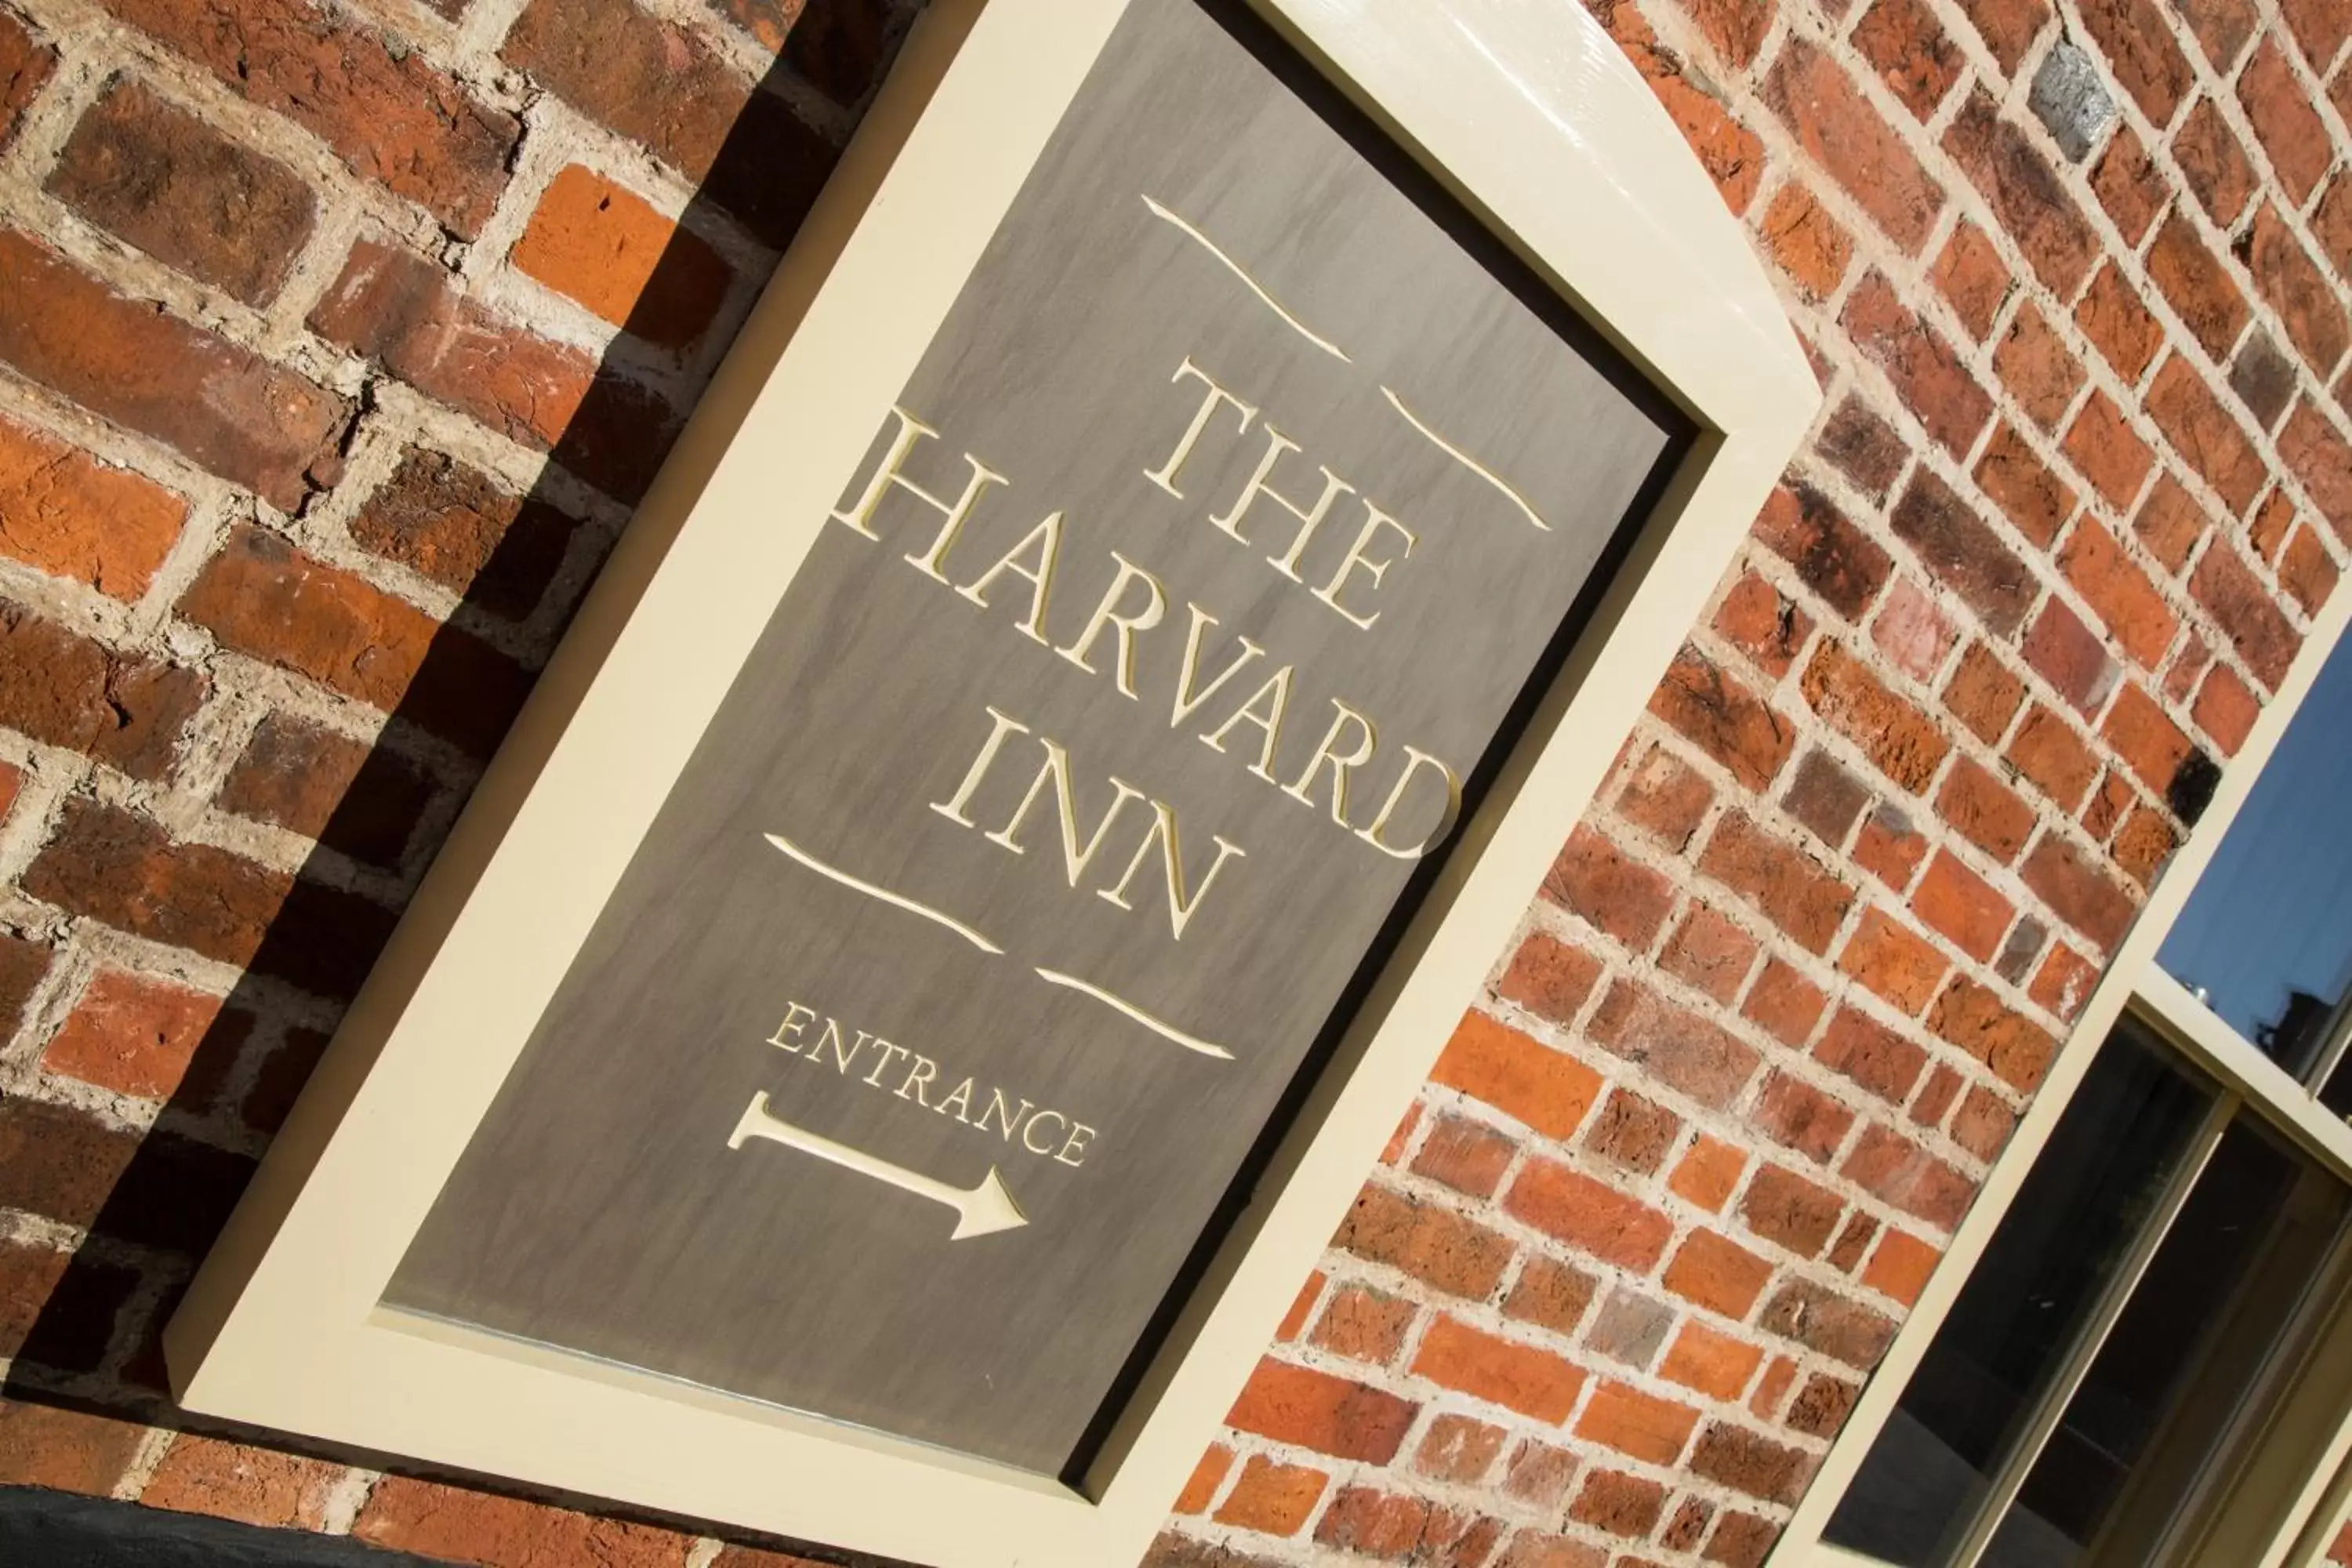 Property logo or sign in The Harvard Inn